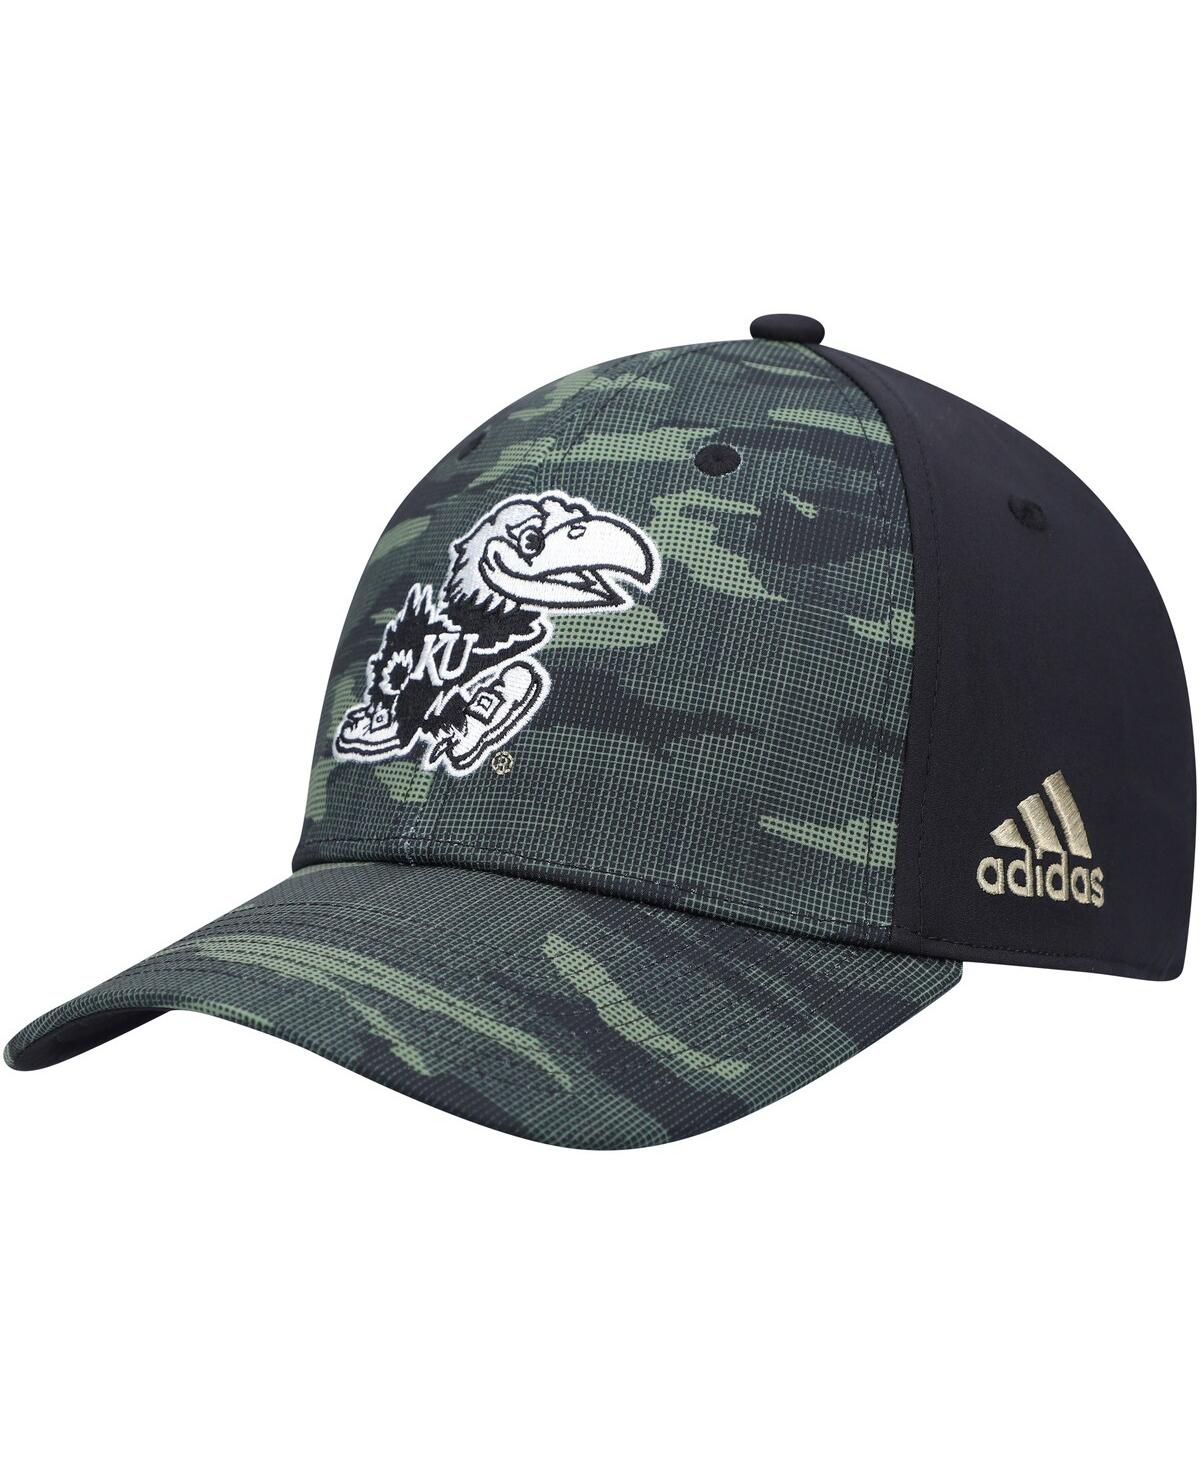 Shop Adidas Originals Men's Adidas Camo Kansas Jayhawks Military-inspired Appreciation Flex Hat